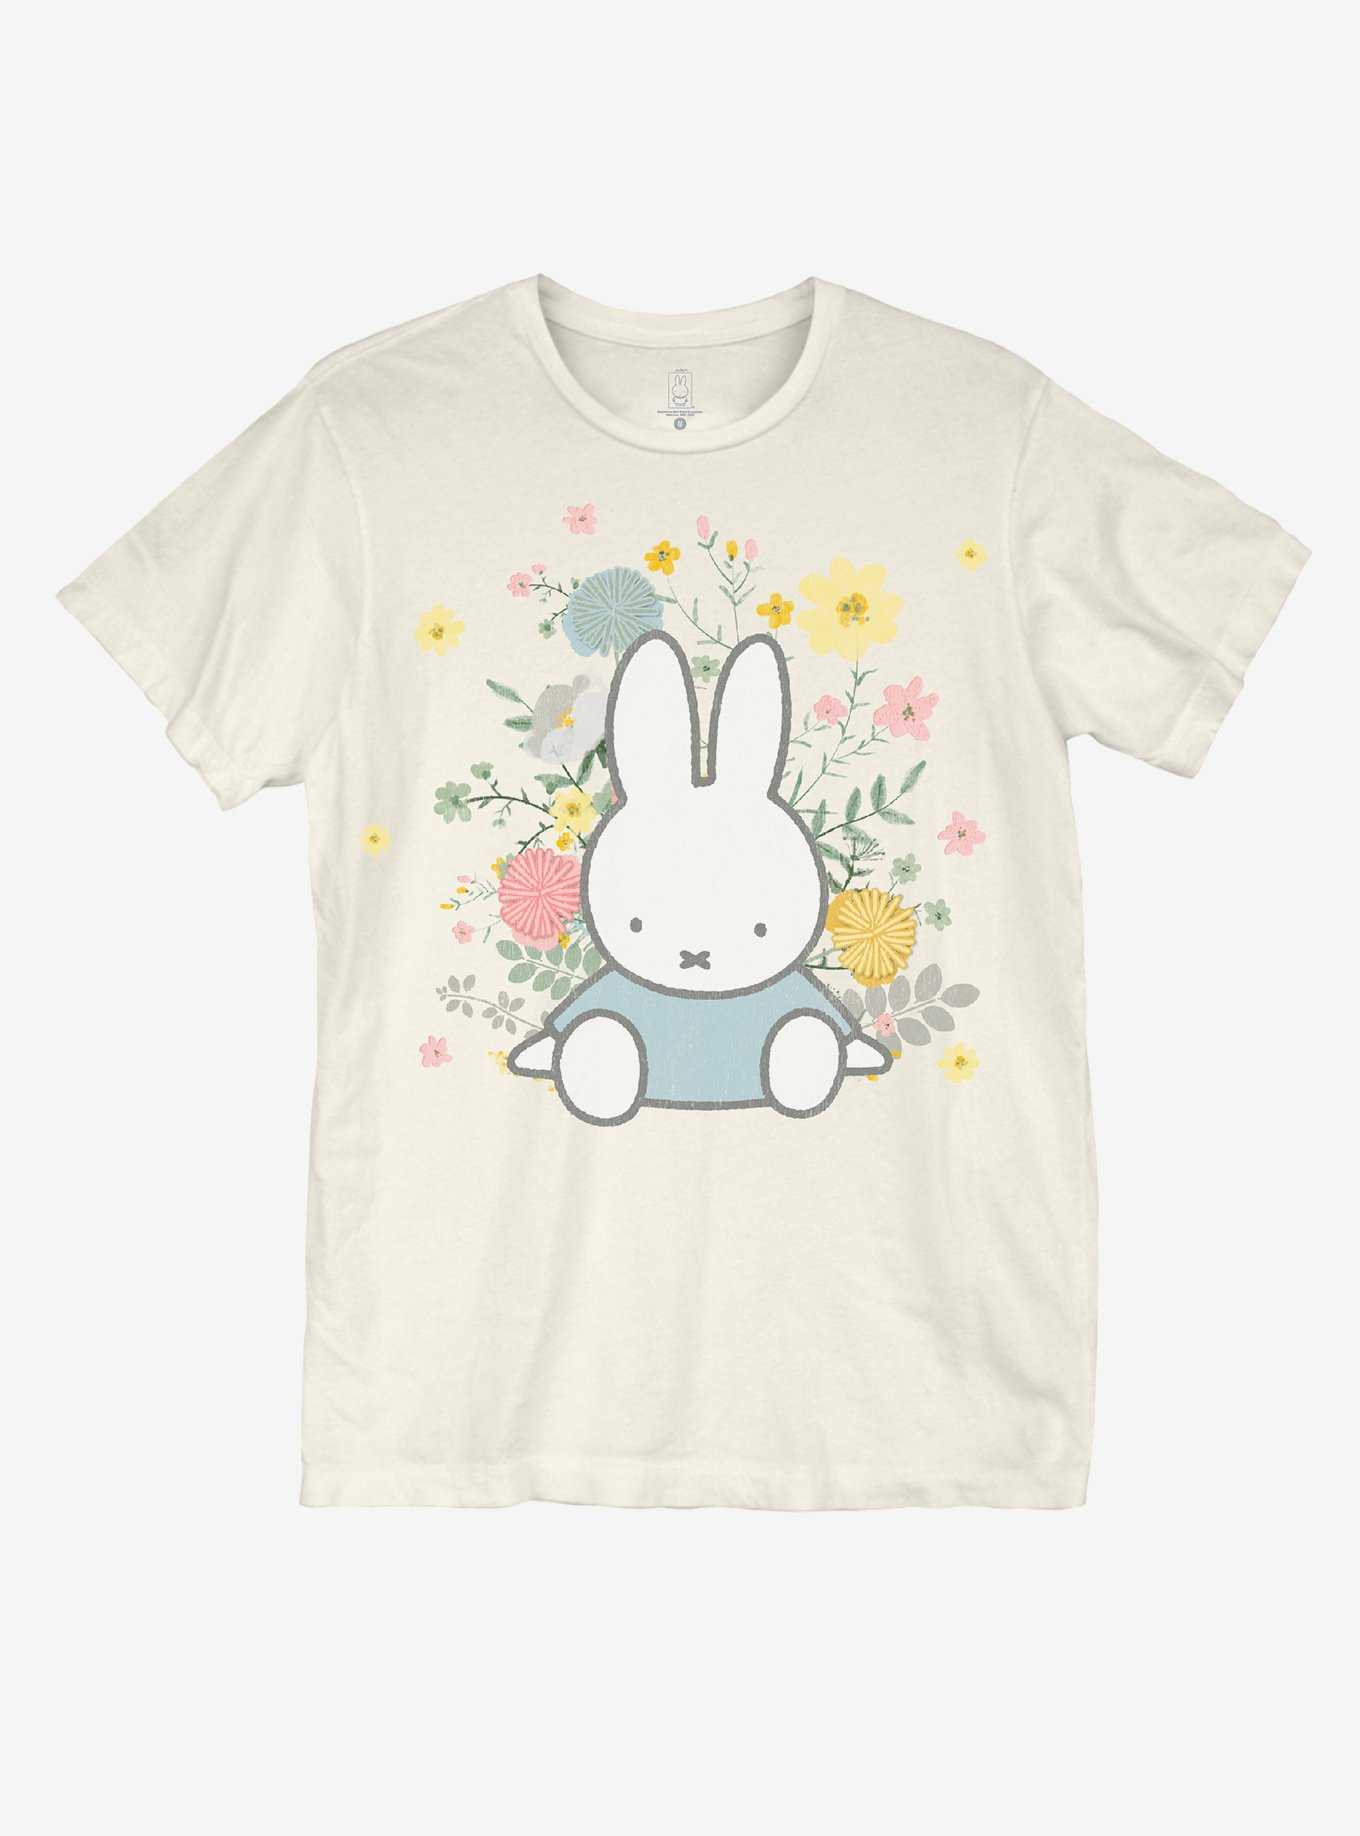 Miffy Floral Boyfriend Fit Girls T-Shirt, , hi-res